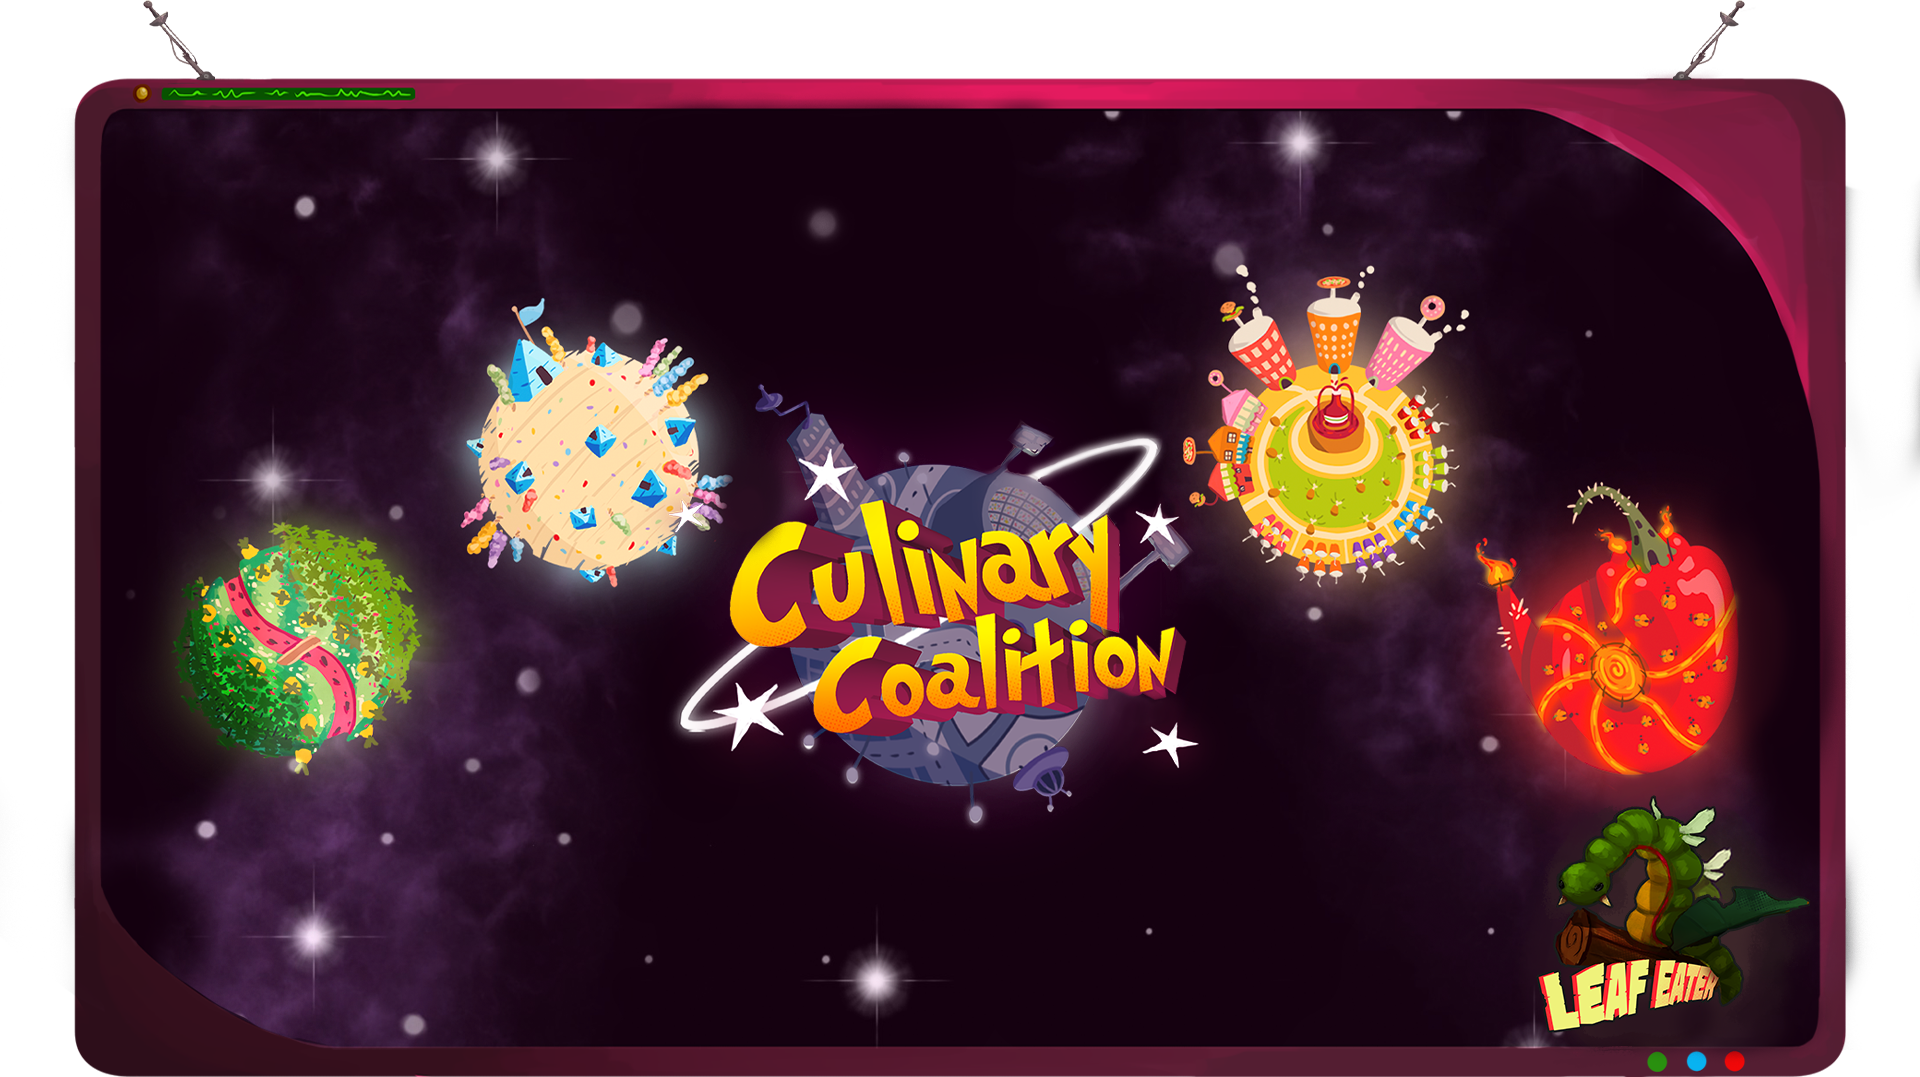 Culinary Coalition